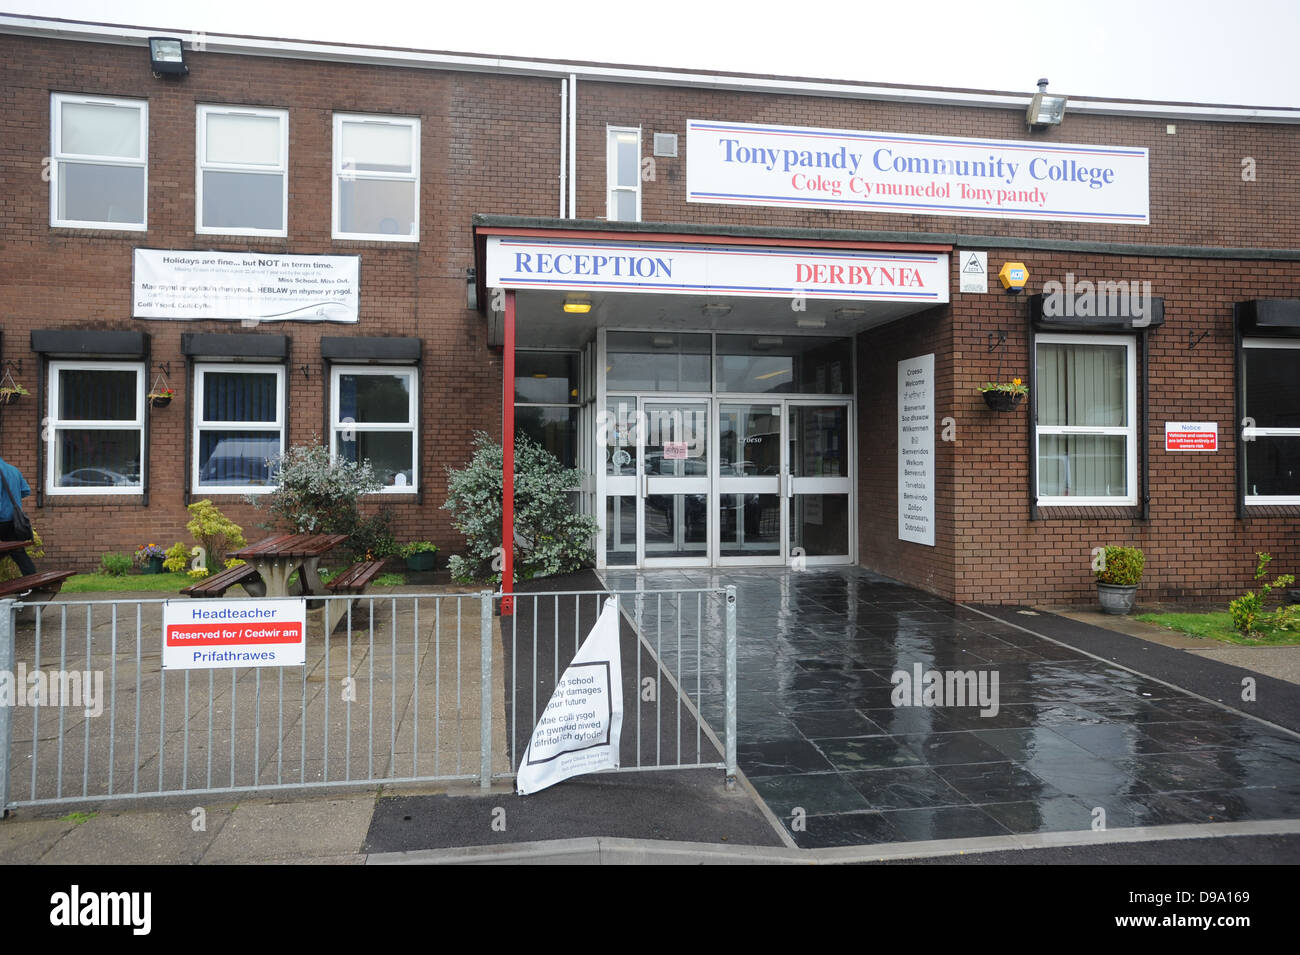 Tonypandy Community College in die Rhondda. Stockfoto